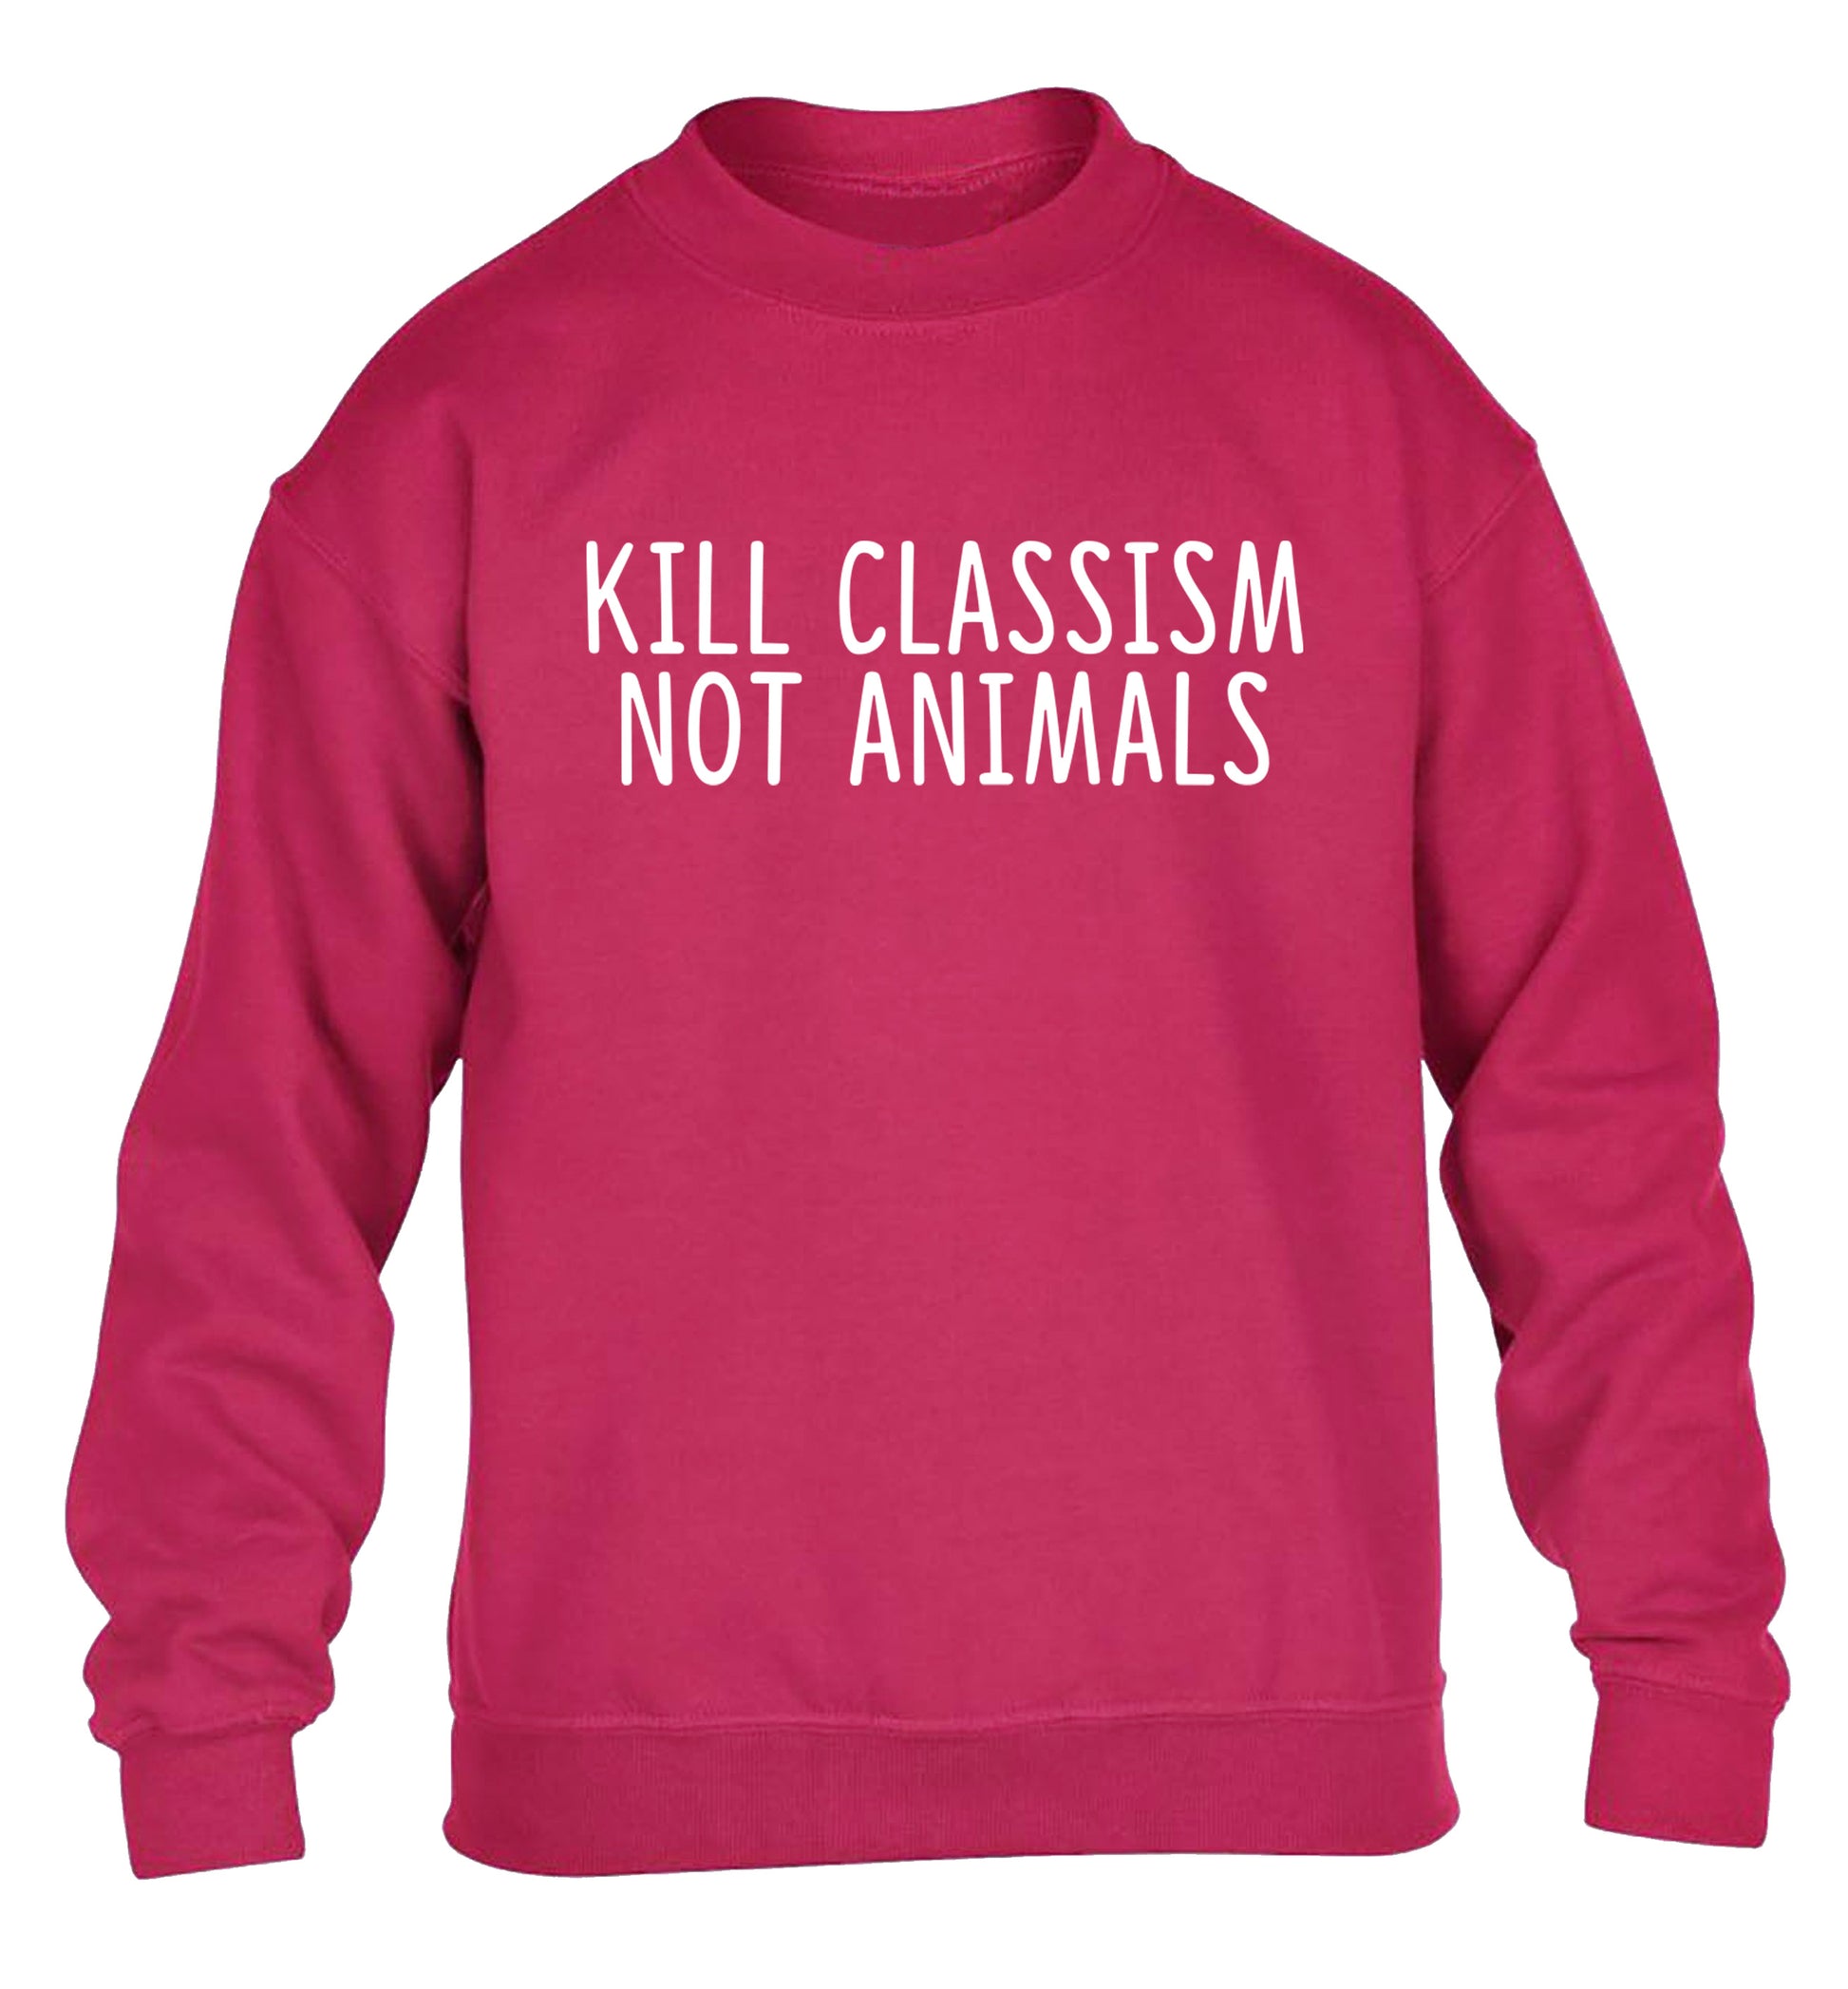 Kill Classism Not Animals children's pink sweater 12-13 Years